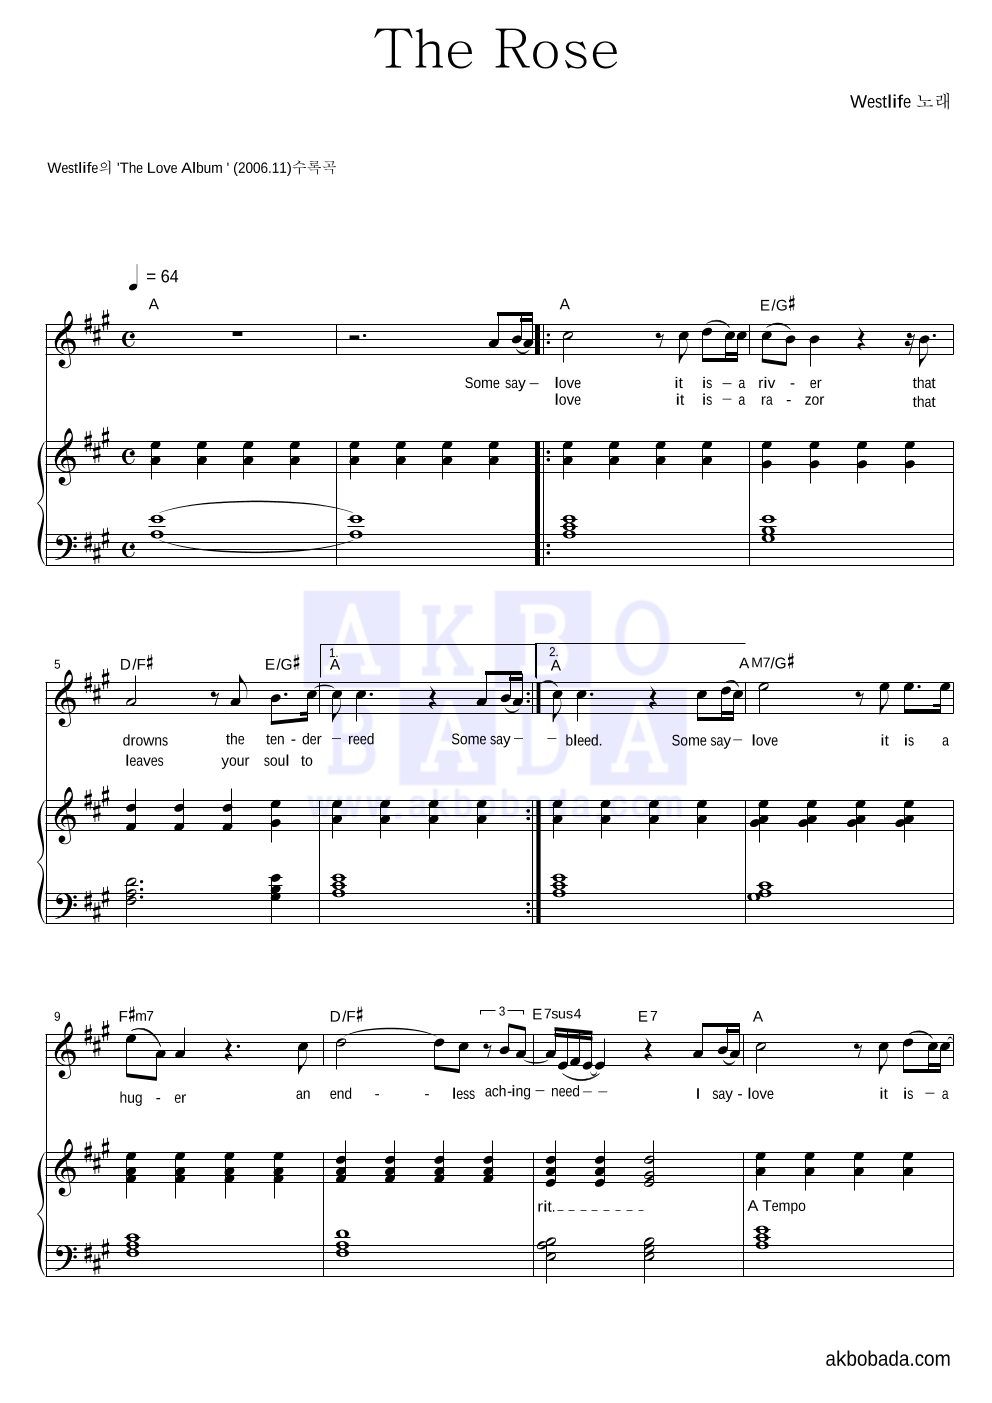 Westlife - The Rose 피아노 3단 악보 